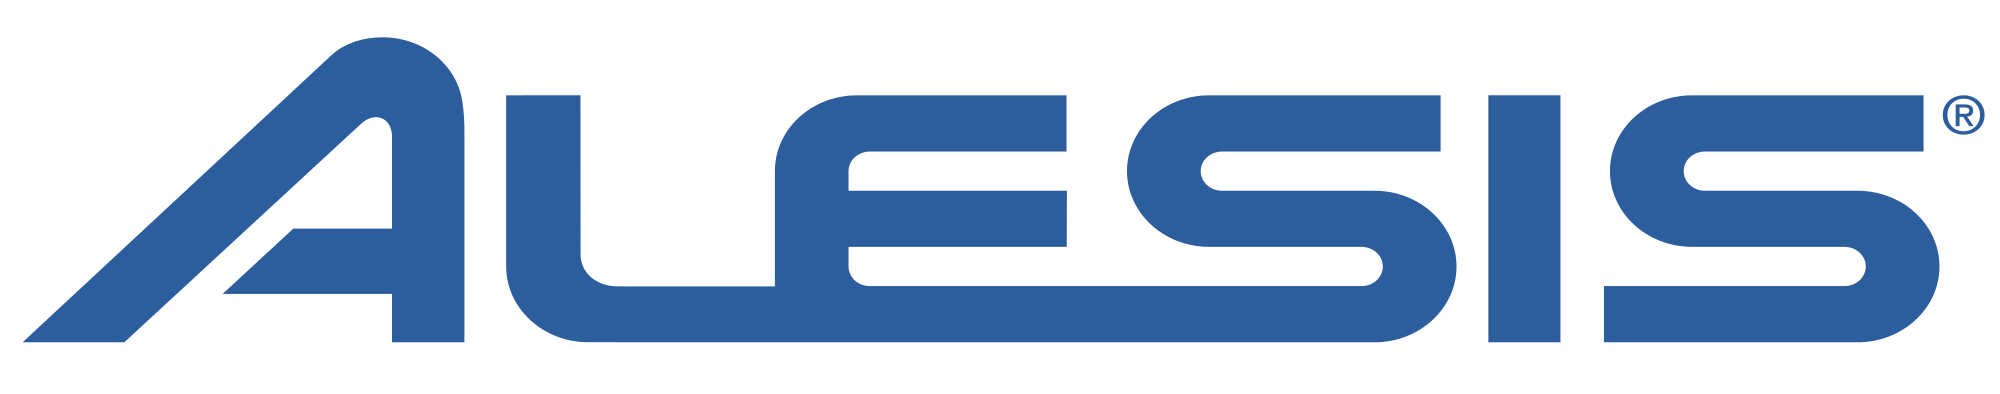 Alesis logo (tm)